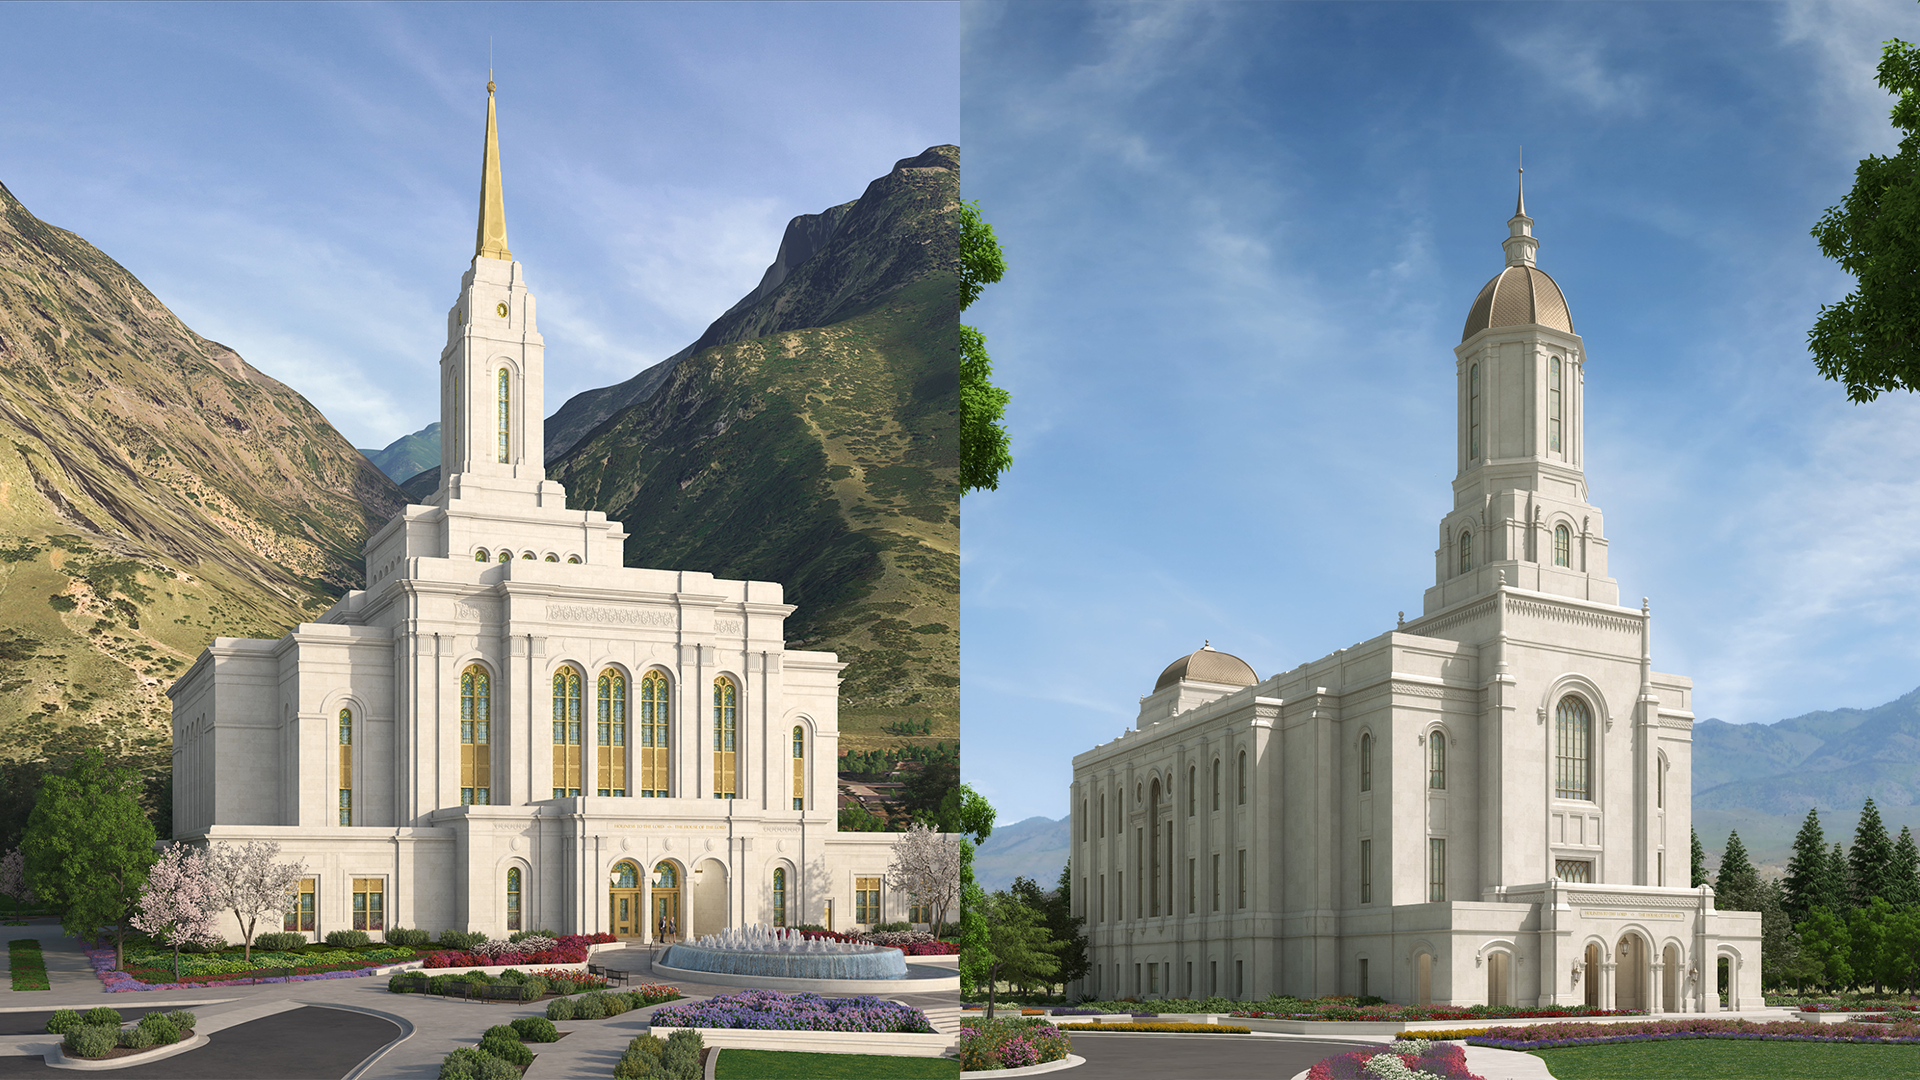 redesigned Provo temple...